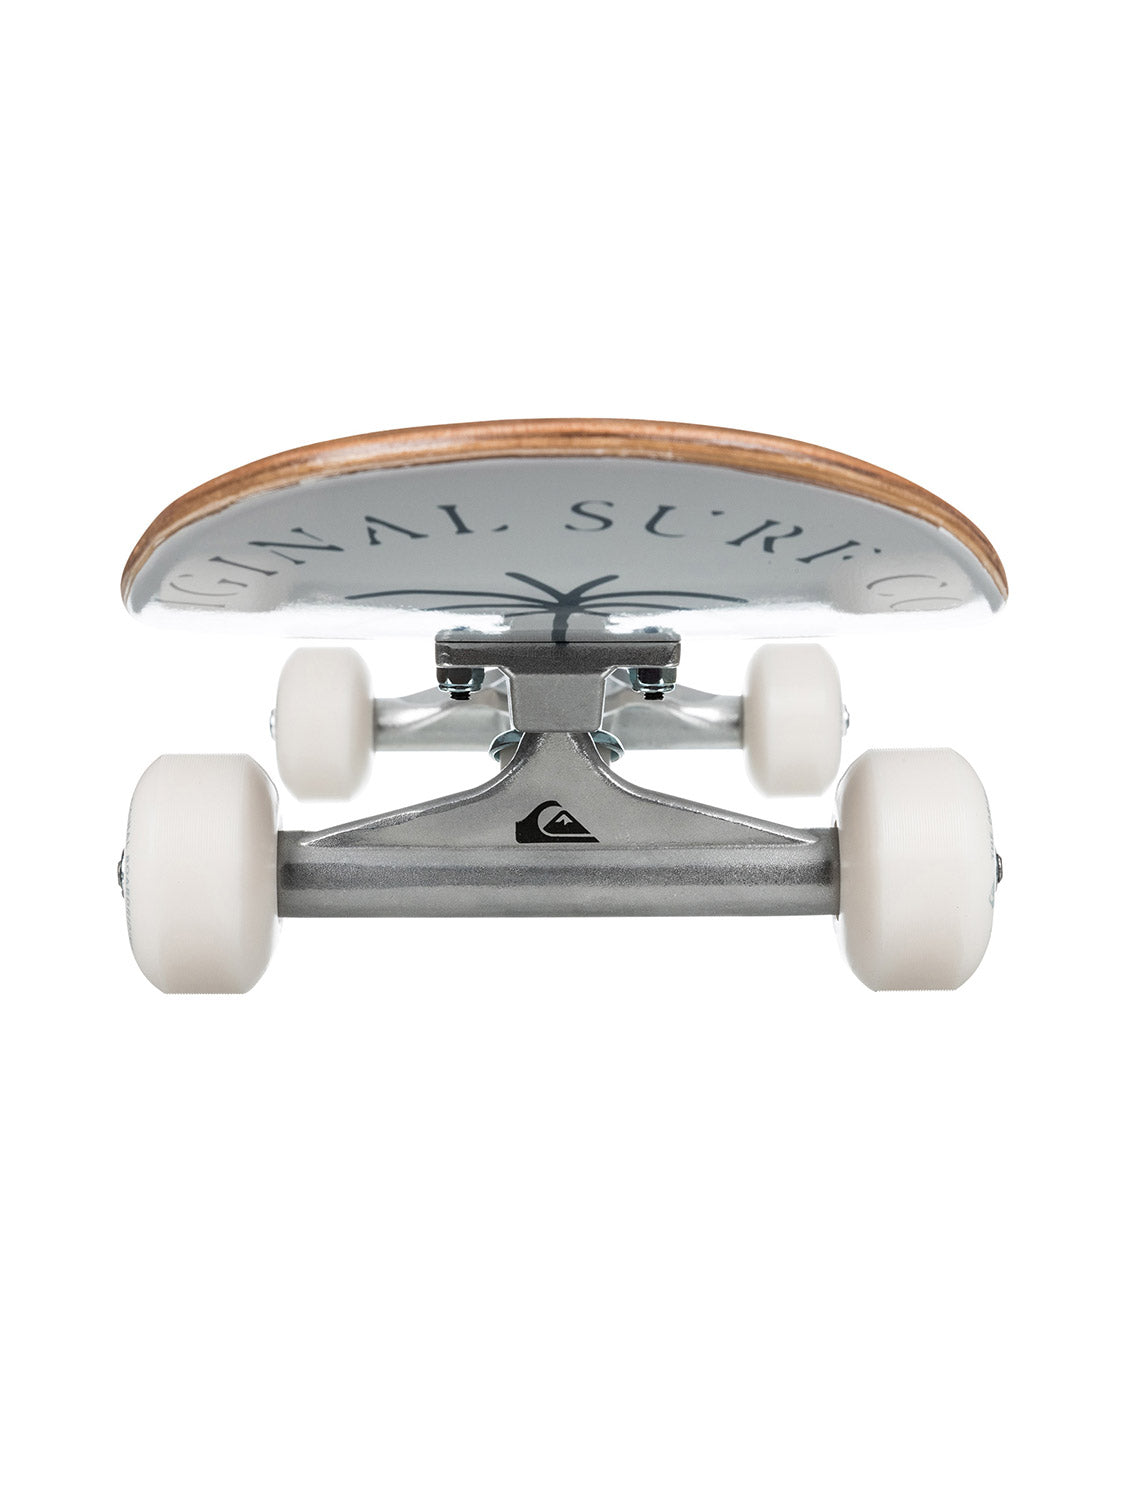 Quiksilver Palming 8.25" X 32.5" Skateboard